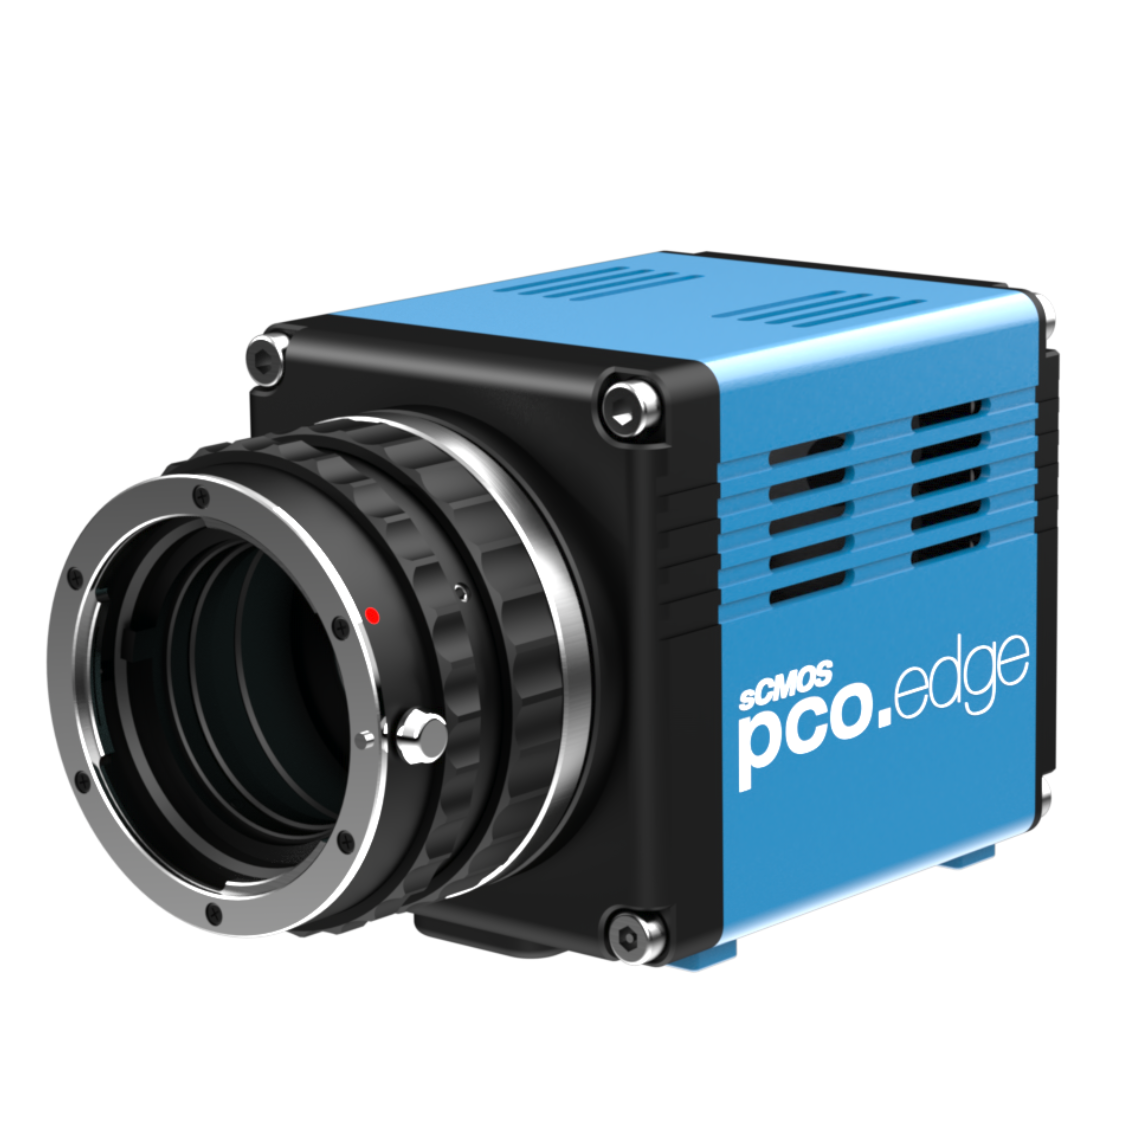 pco.edge 4.2 LT USB sCMOS相机